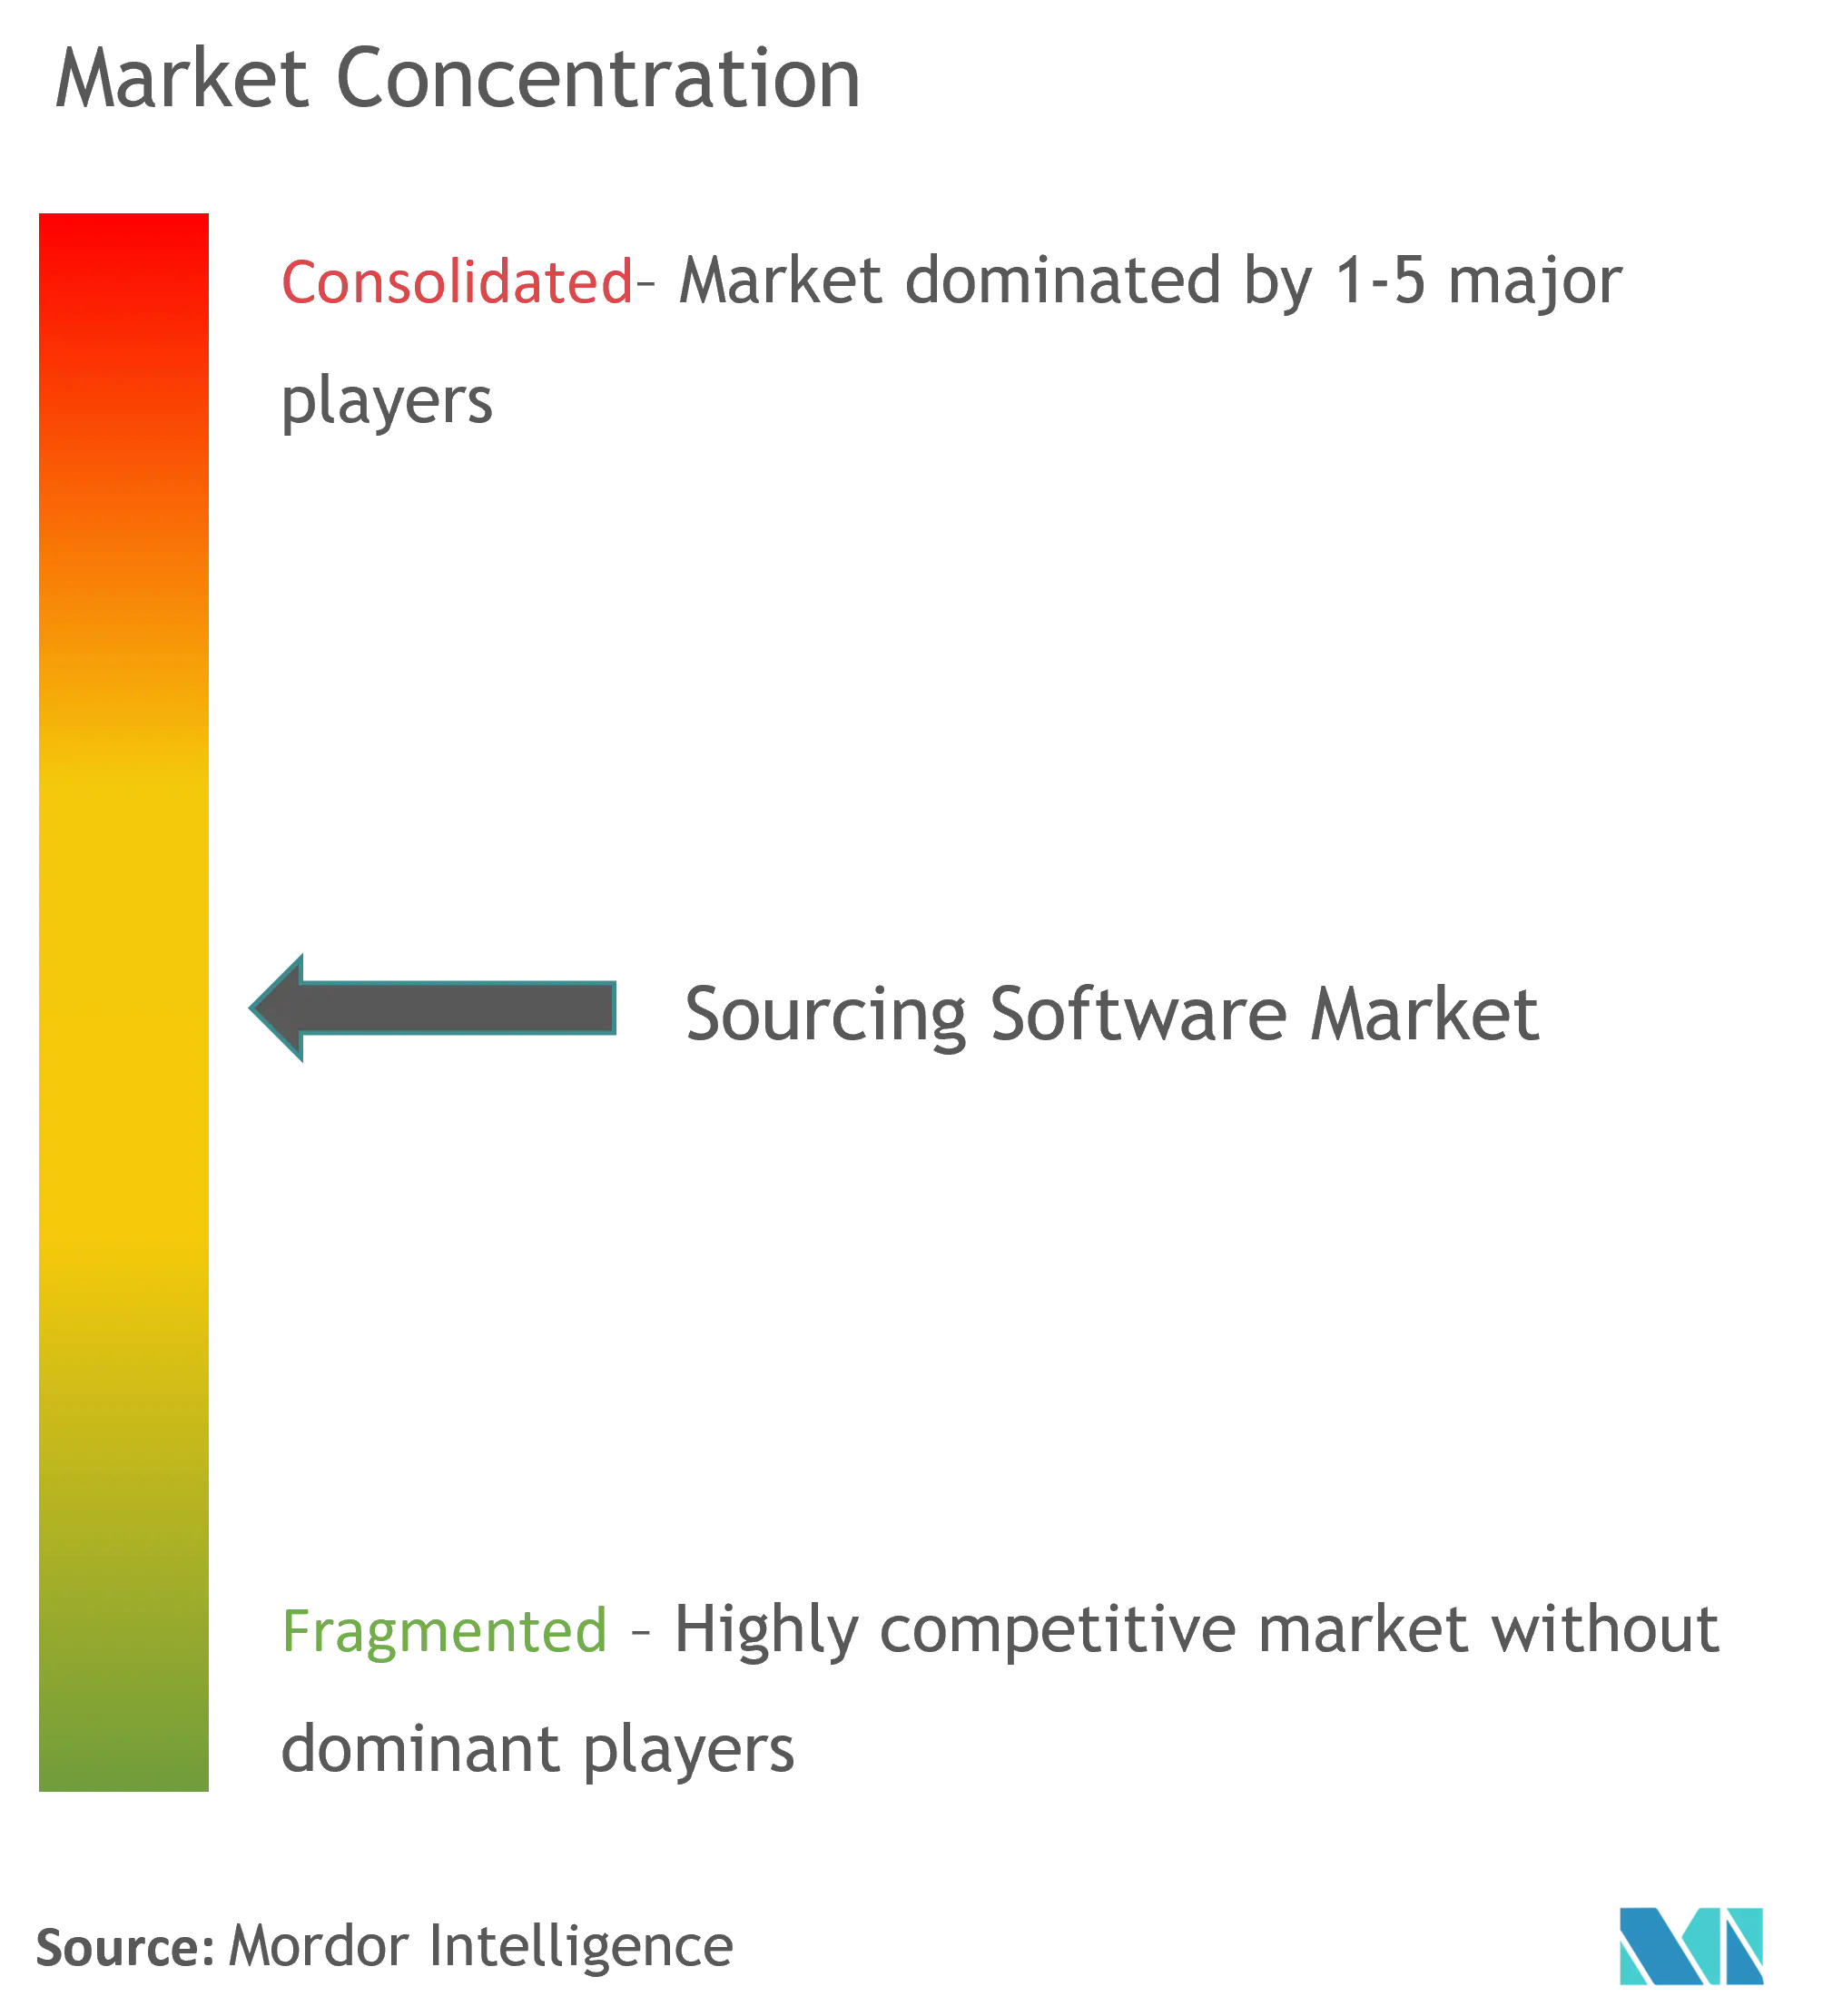 Sourcing-Softwaremarkt – Marktkonzentration.png